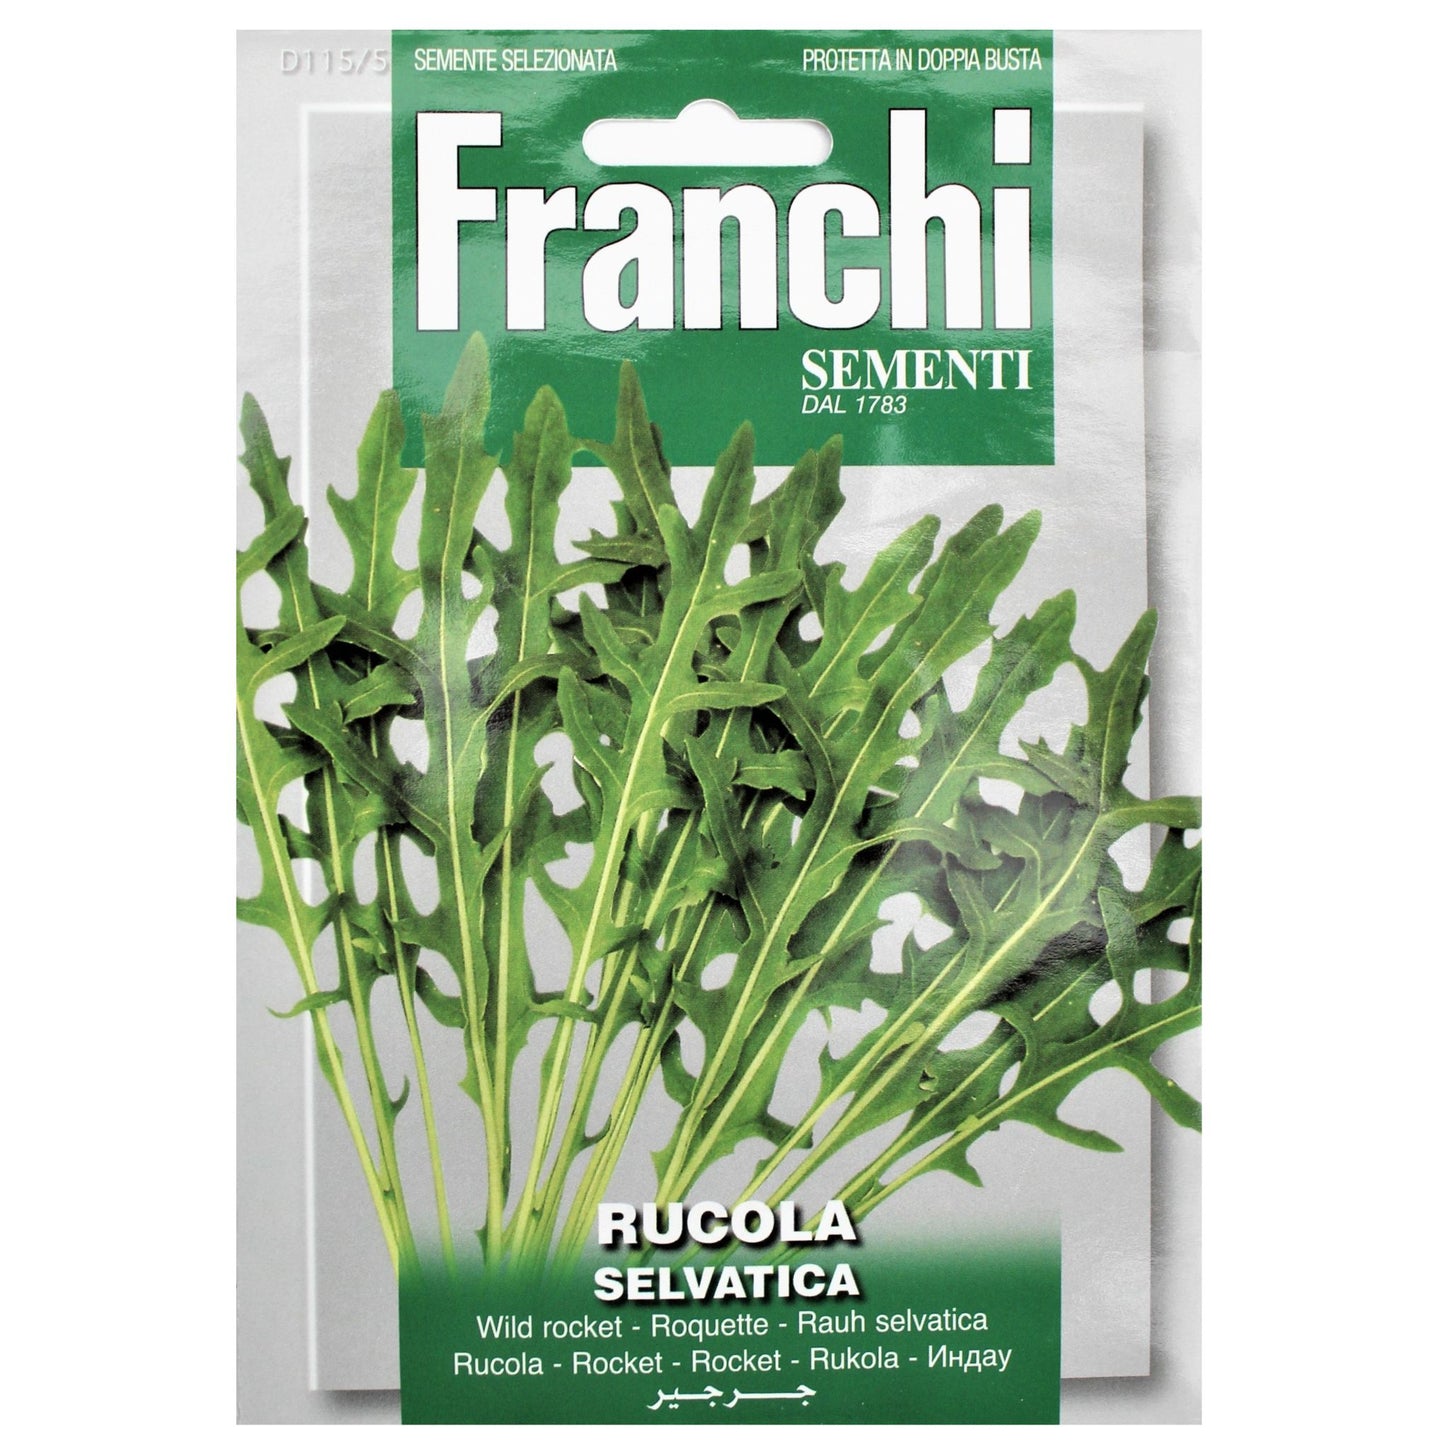 Franchi Seeds - Rucola Salvatica / Wild Rocket